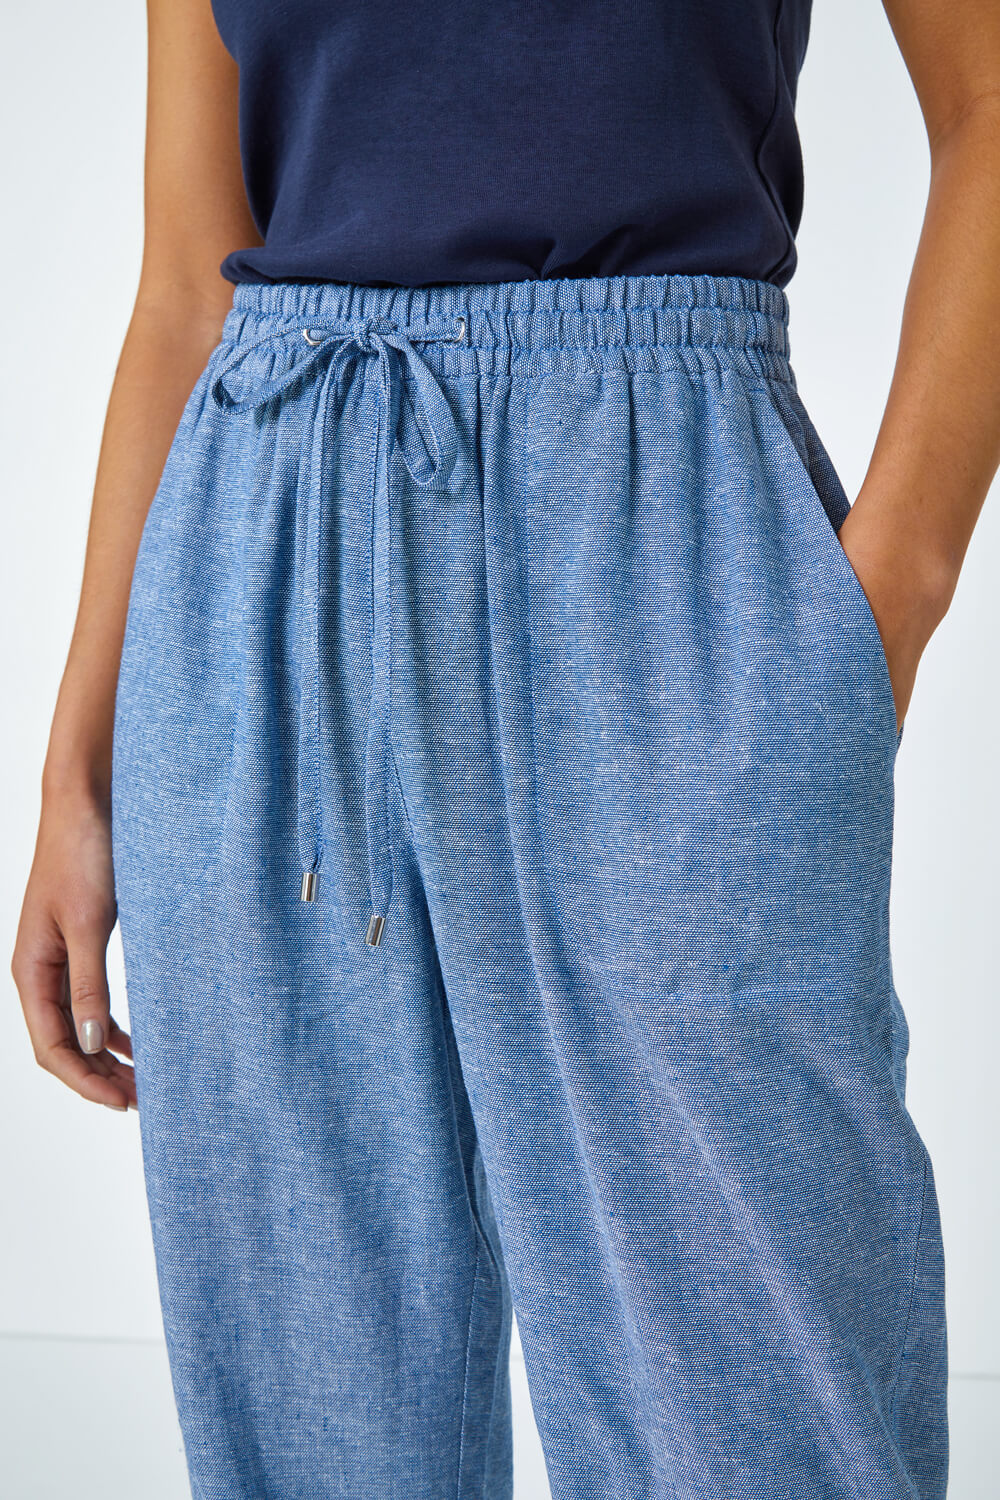 Blue Petite Linen Mix Wide Leg Trousers, Image 5 of 5